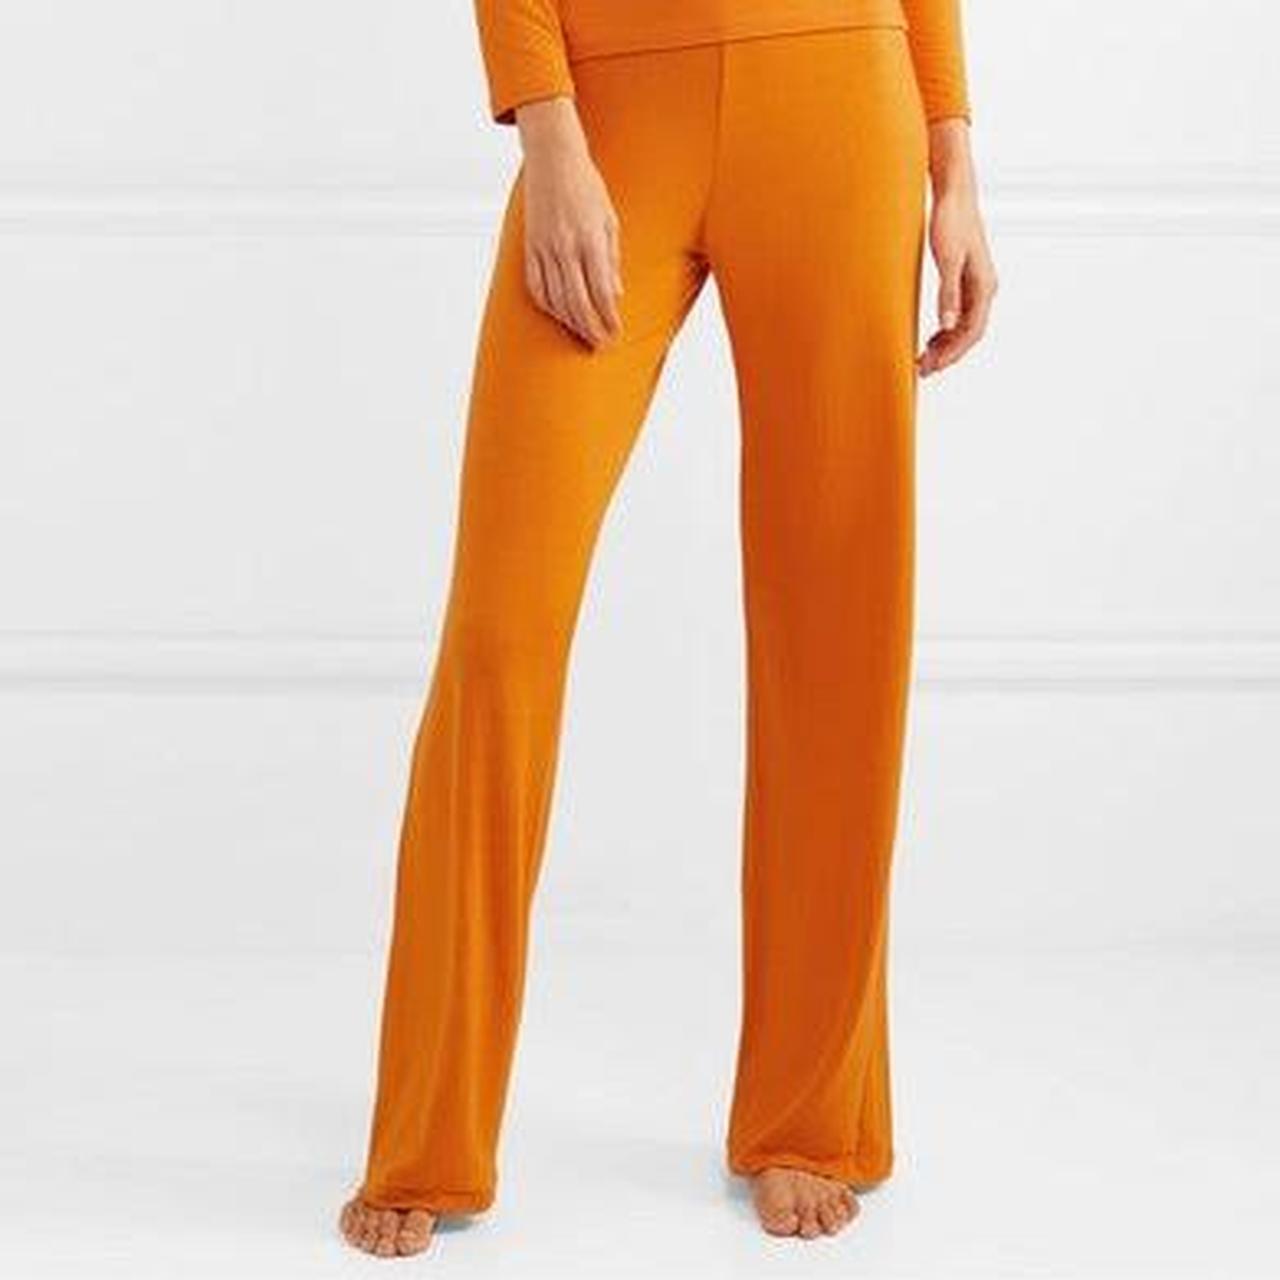 How To Wear Orange Trousers | Orange pants outfit, Orange pants, Orange  outfit